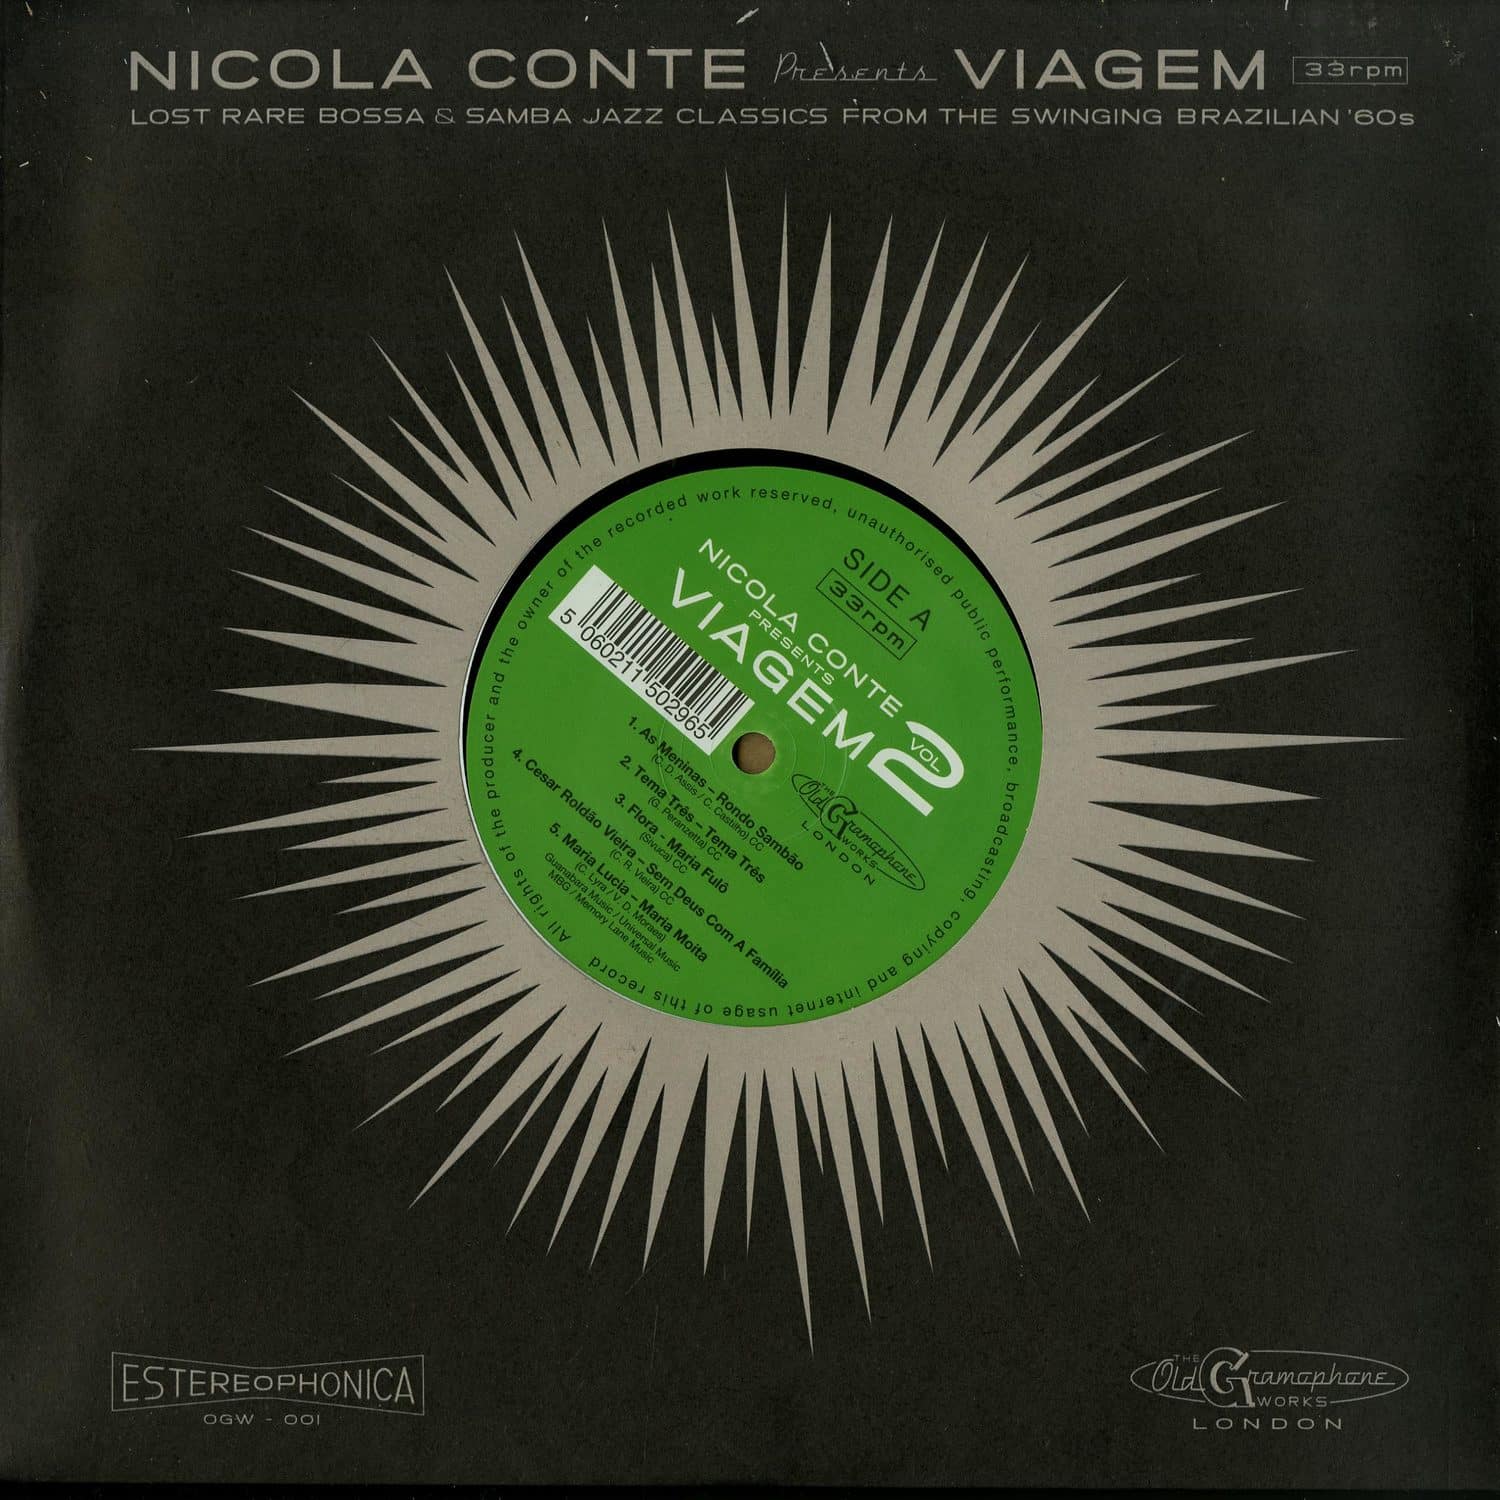 Nicola Conte Presents Viagem - VOLUME 2 